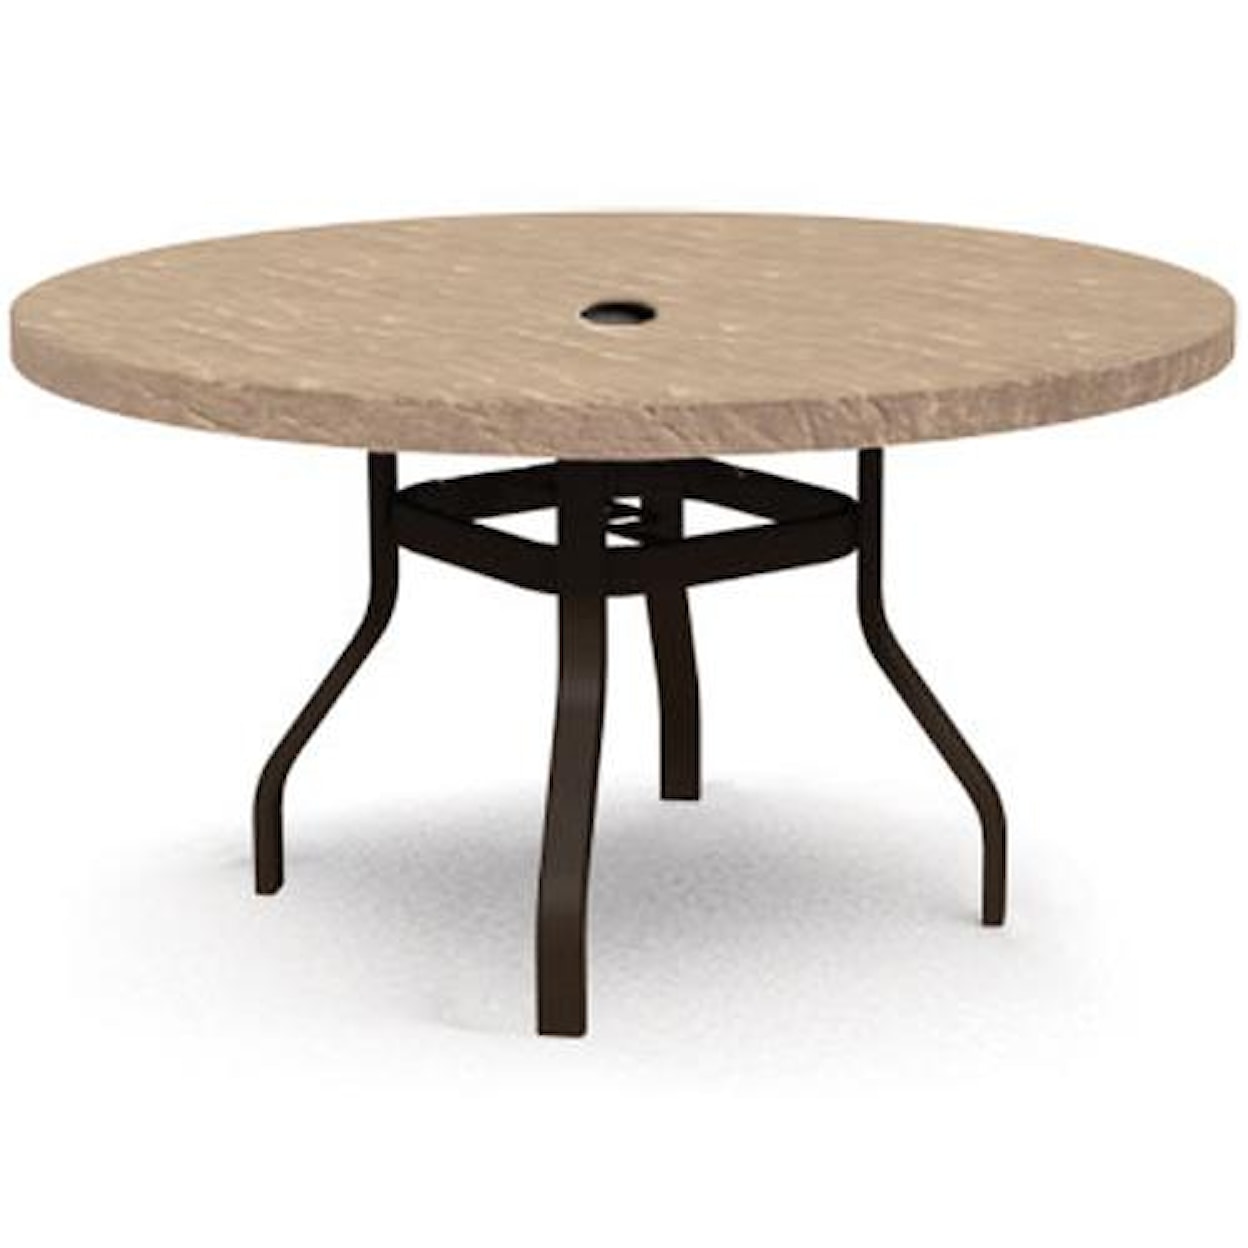 Homecrest Sandstone 54" Round Dining Table with Umbrella Hole